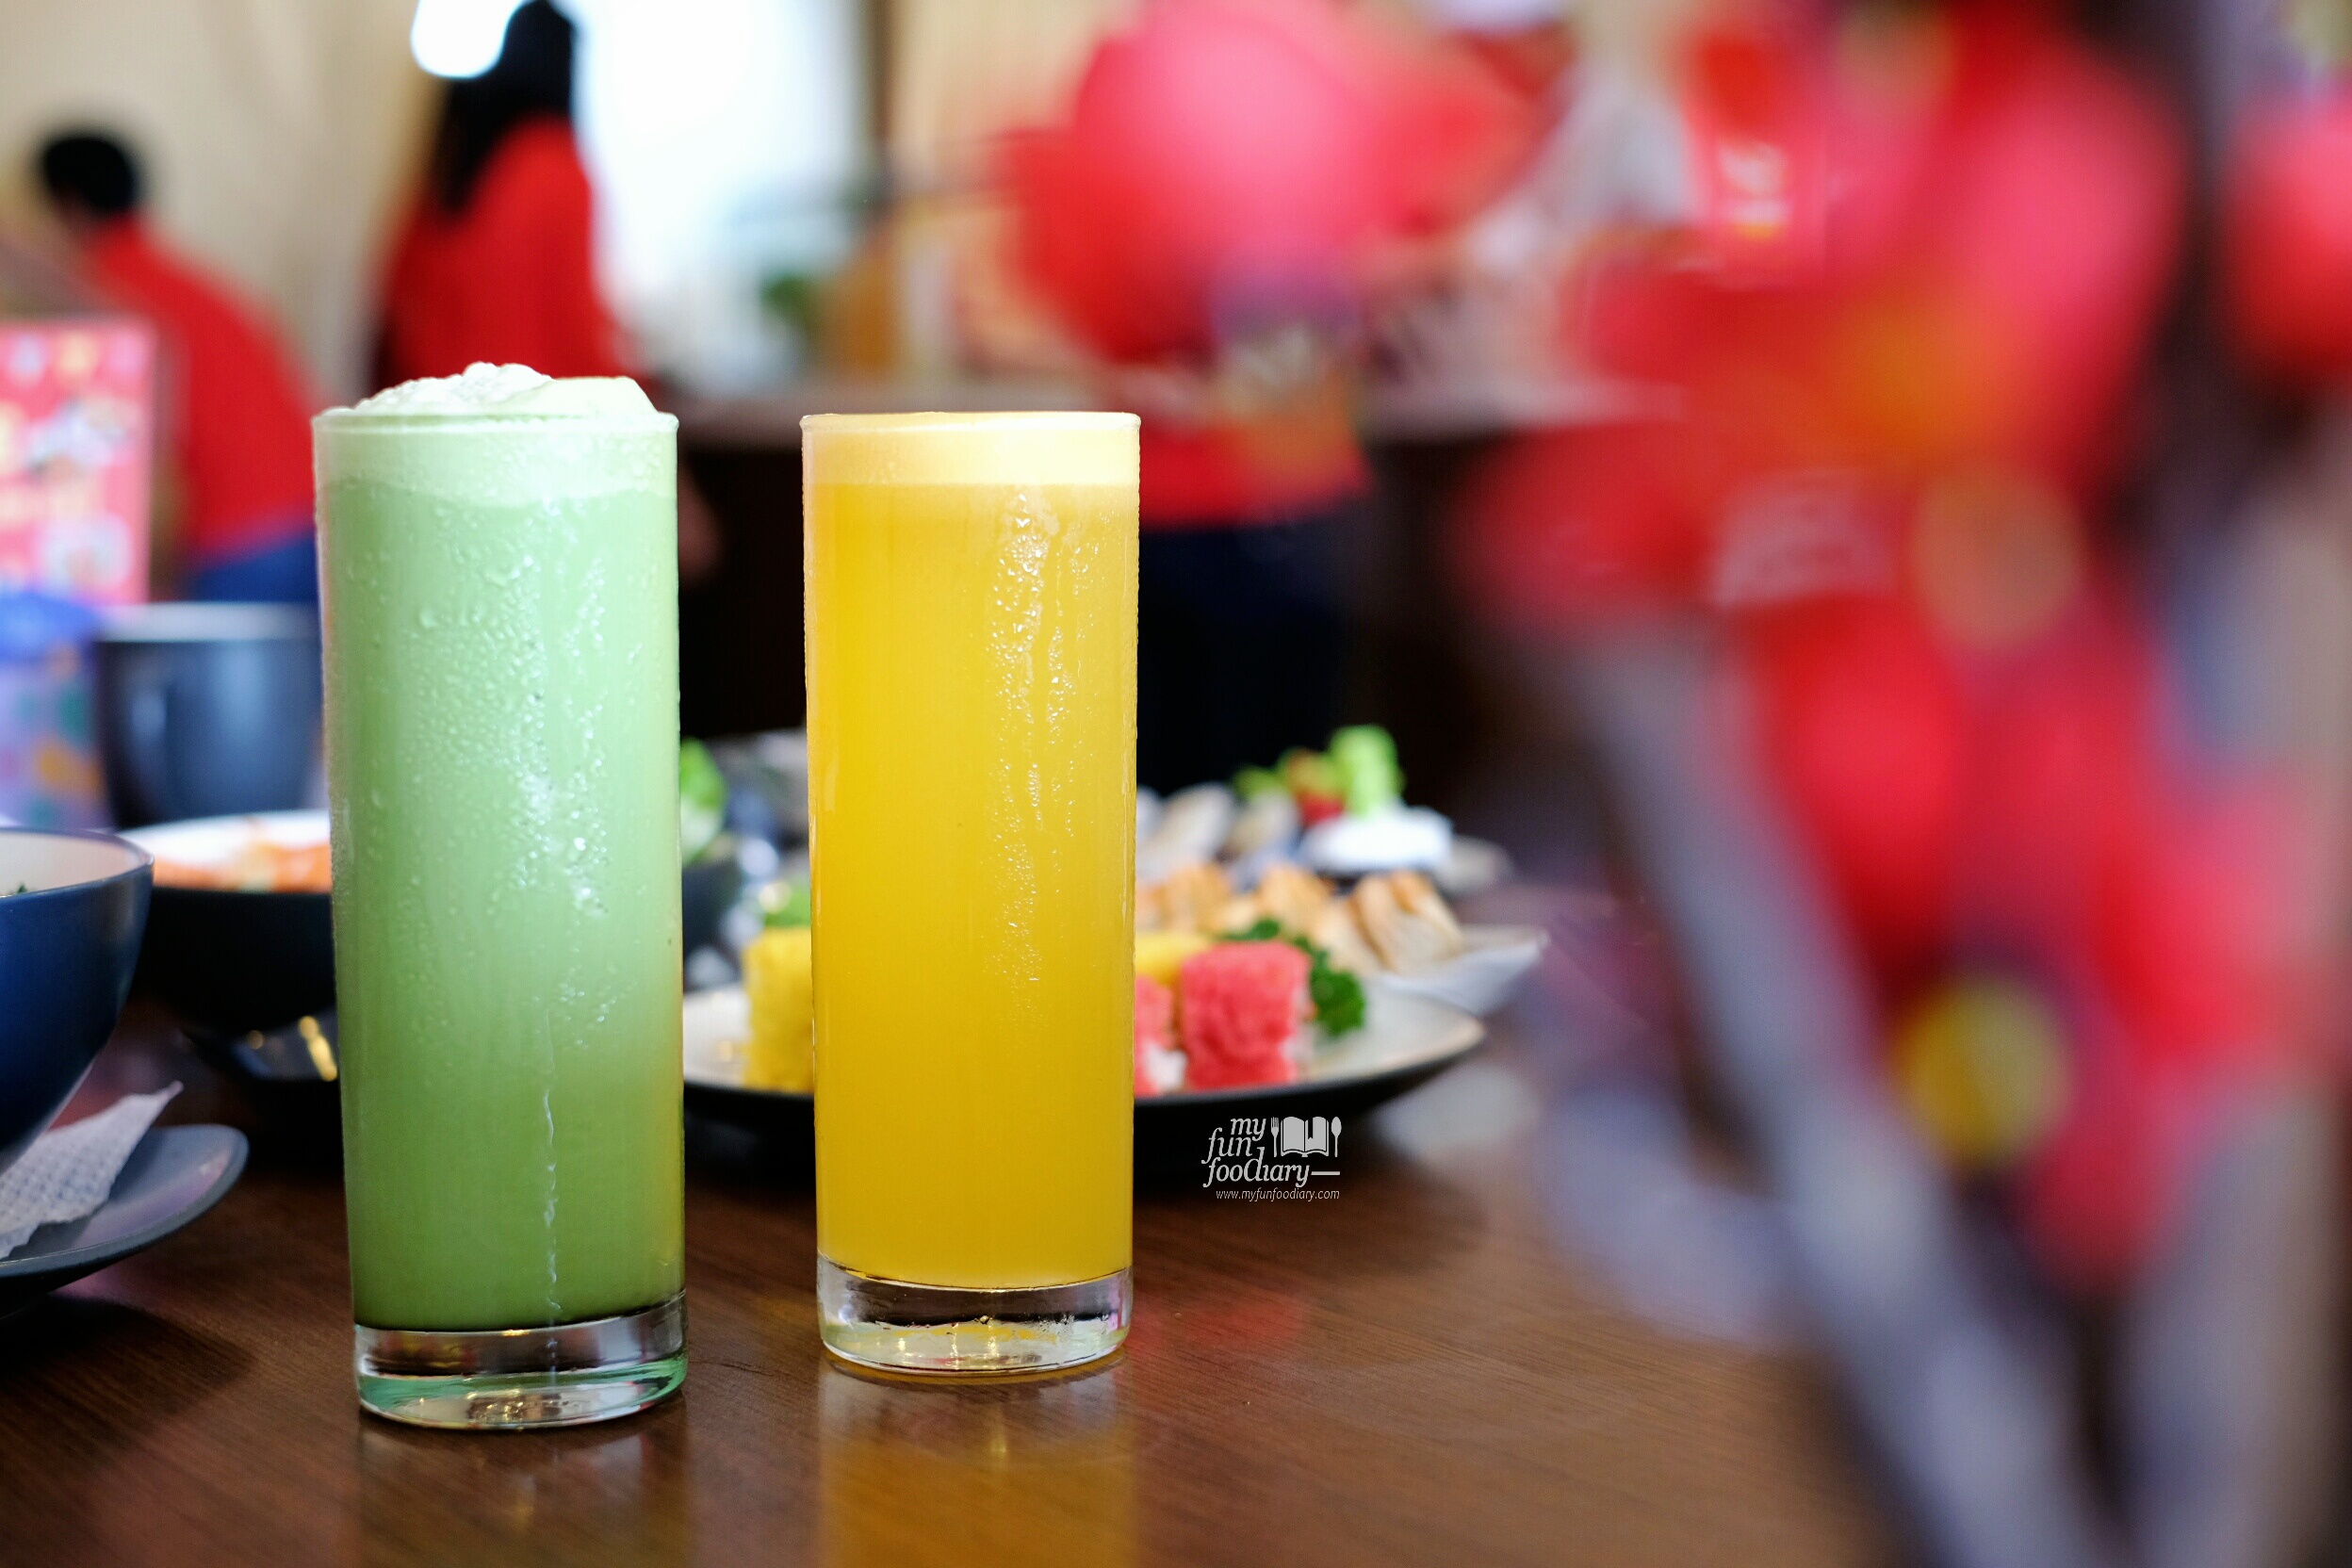 Green Tea Milk Shake and Orange Juice at Sushi Naru by Myfunfoodiary